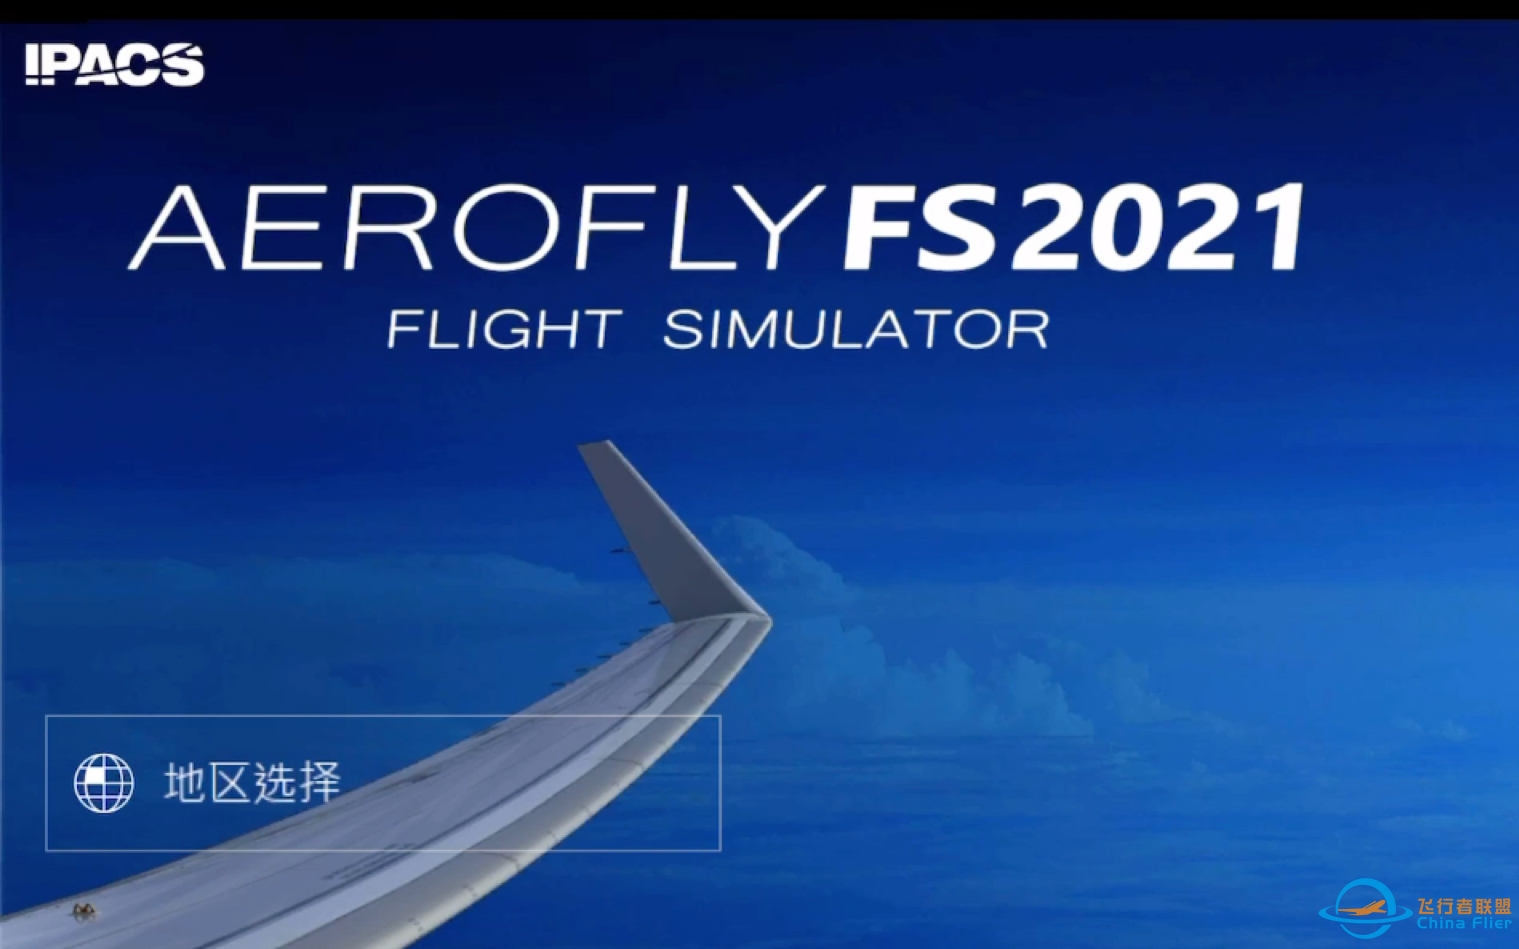 Aerofly fs 2021来了！你想看的，都在这里，超详细介绍！看完再买，不后悔-6091 